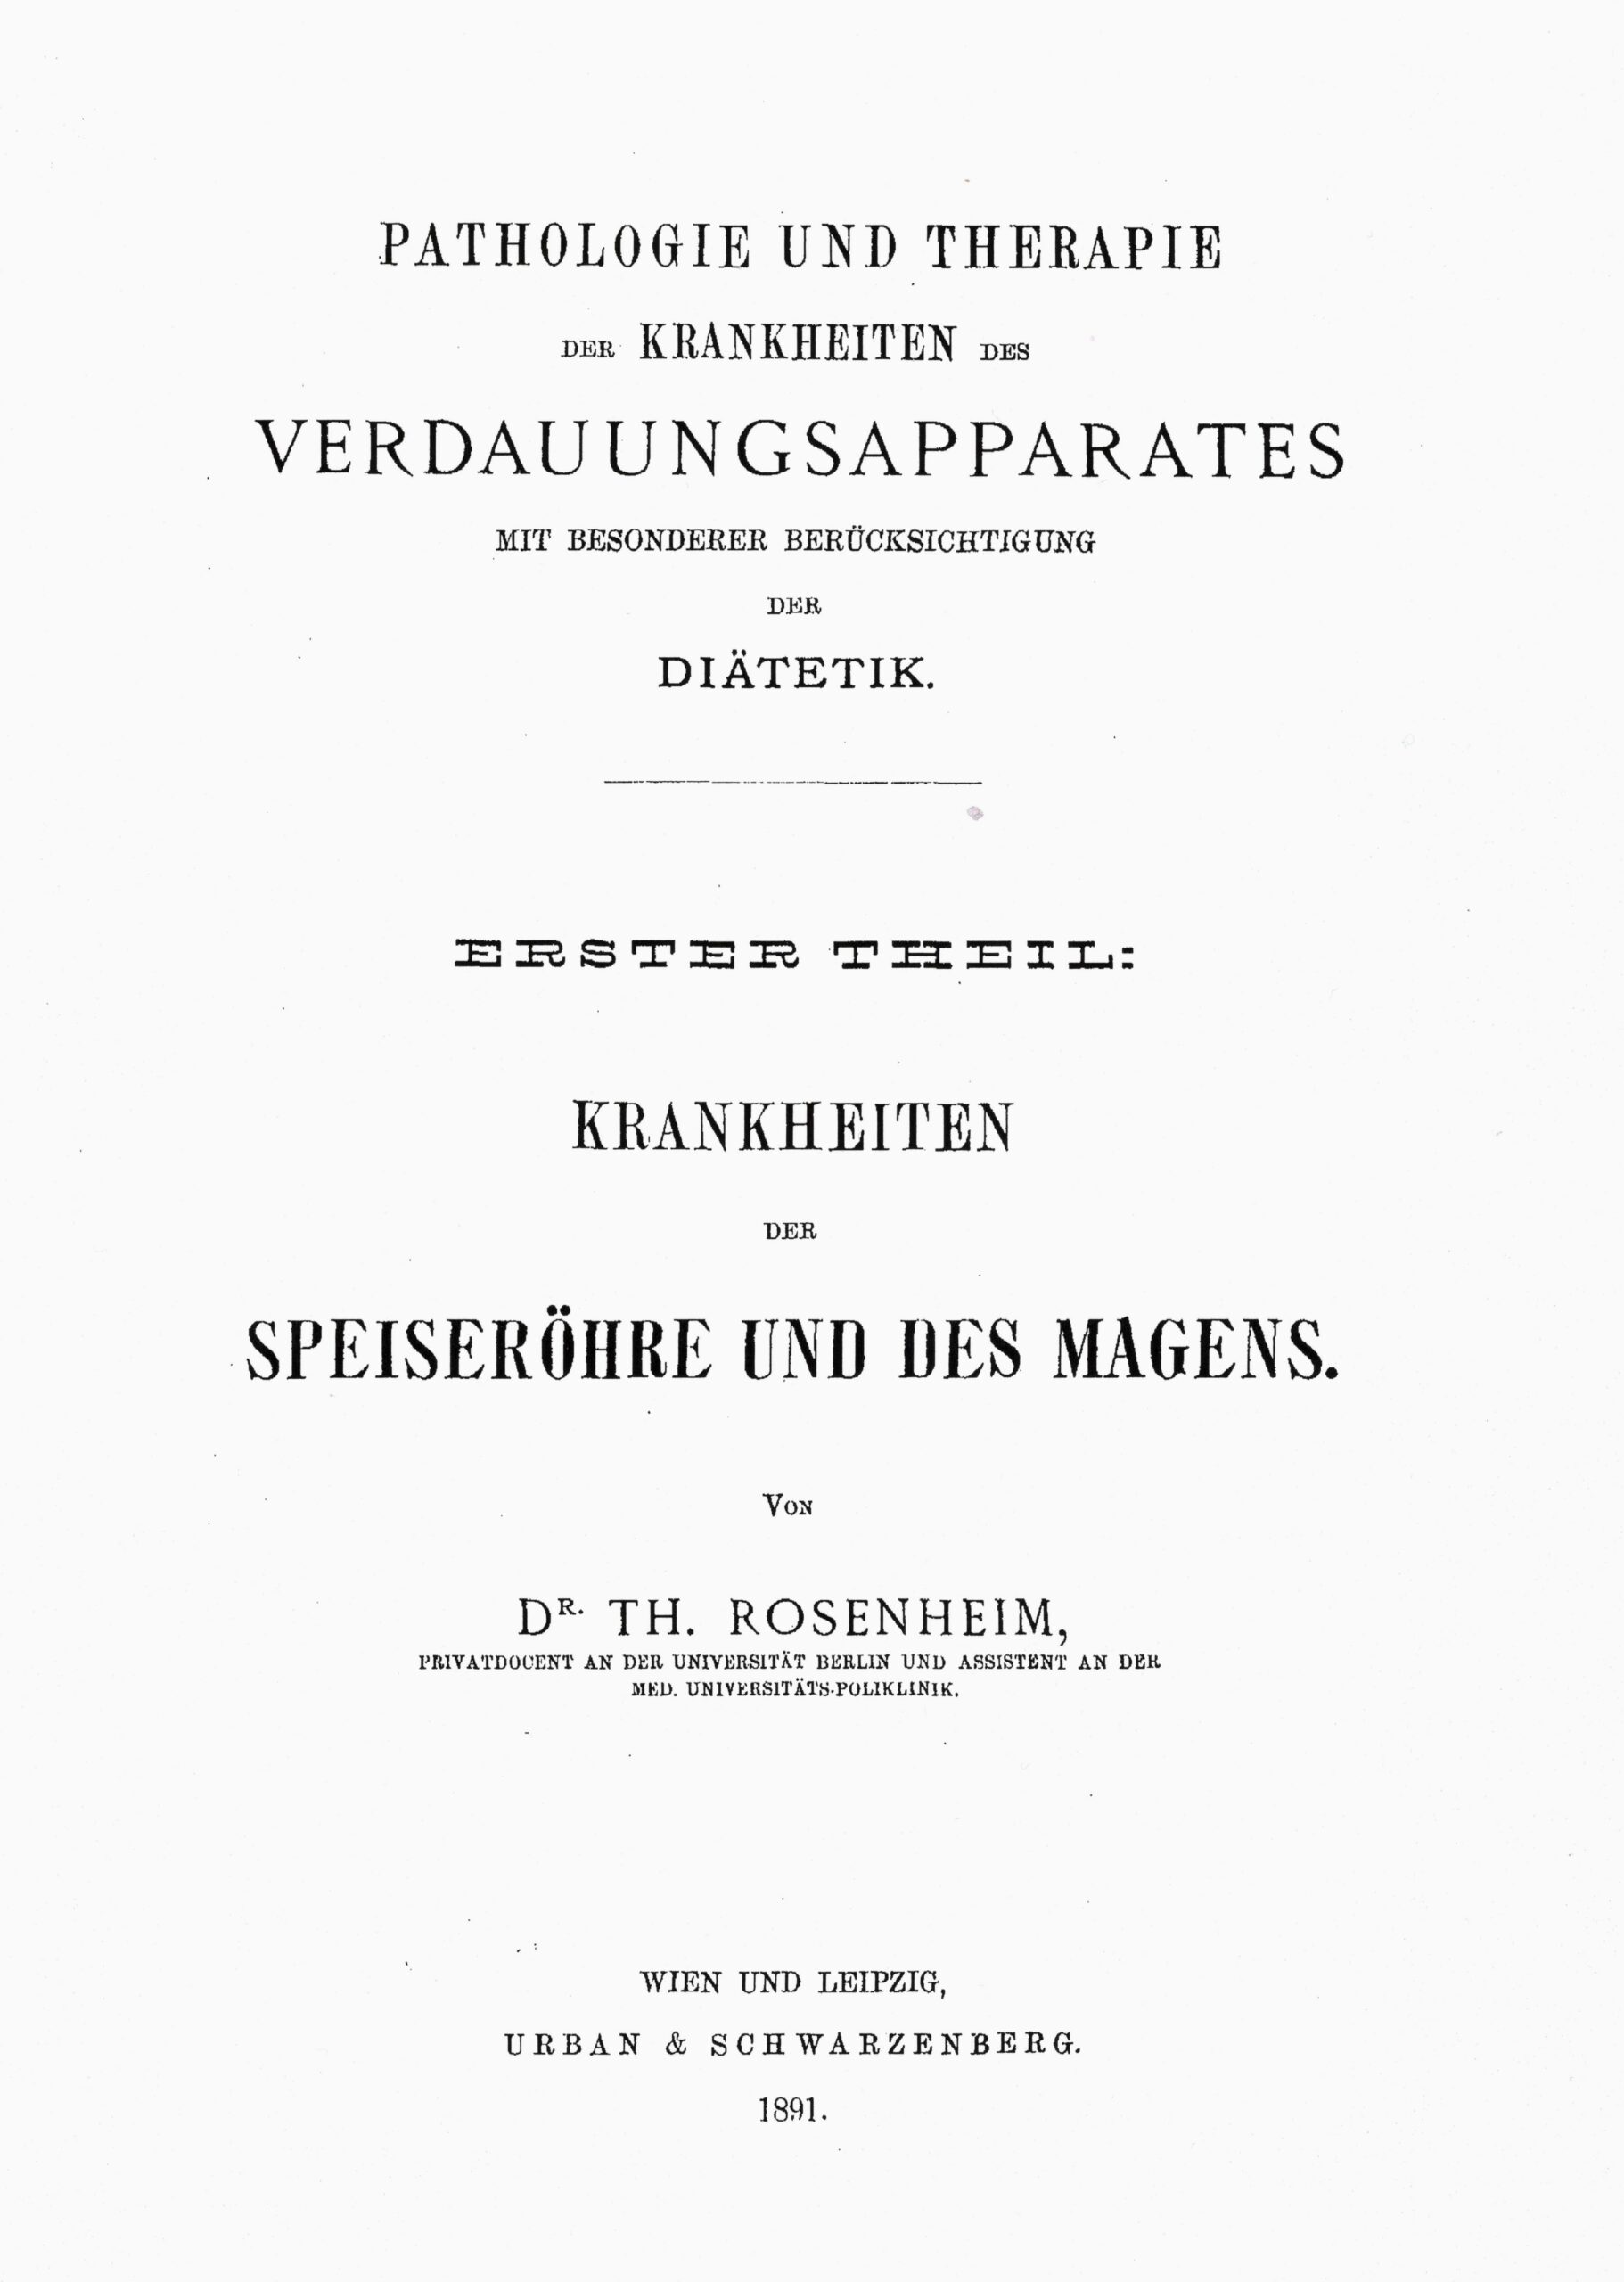 Early publication of Rosenheim 1891